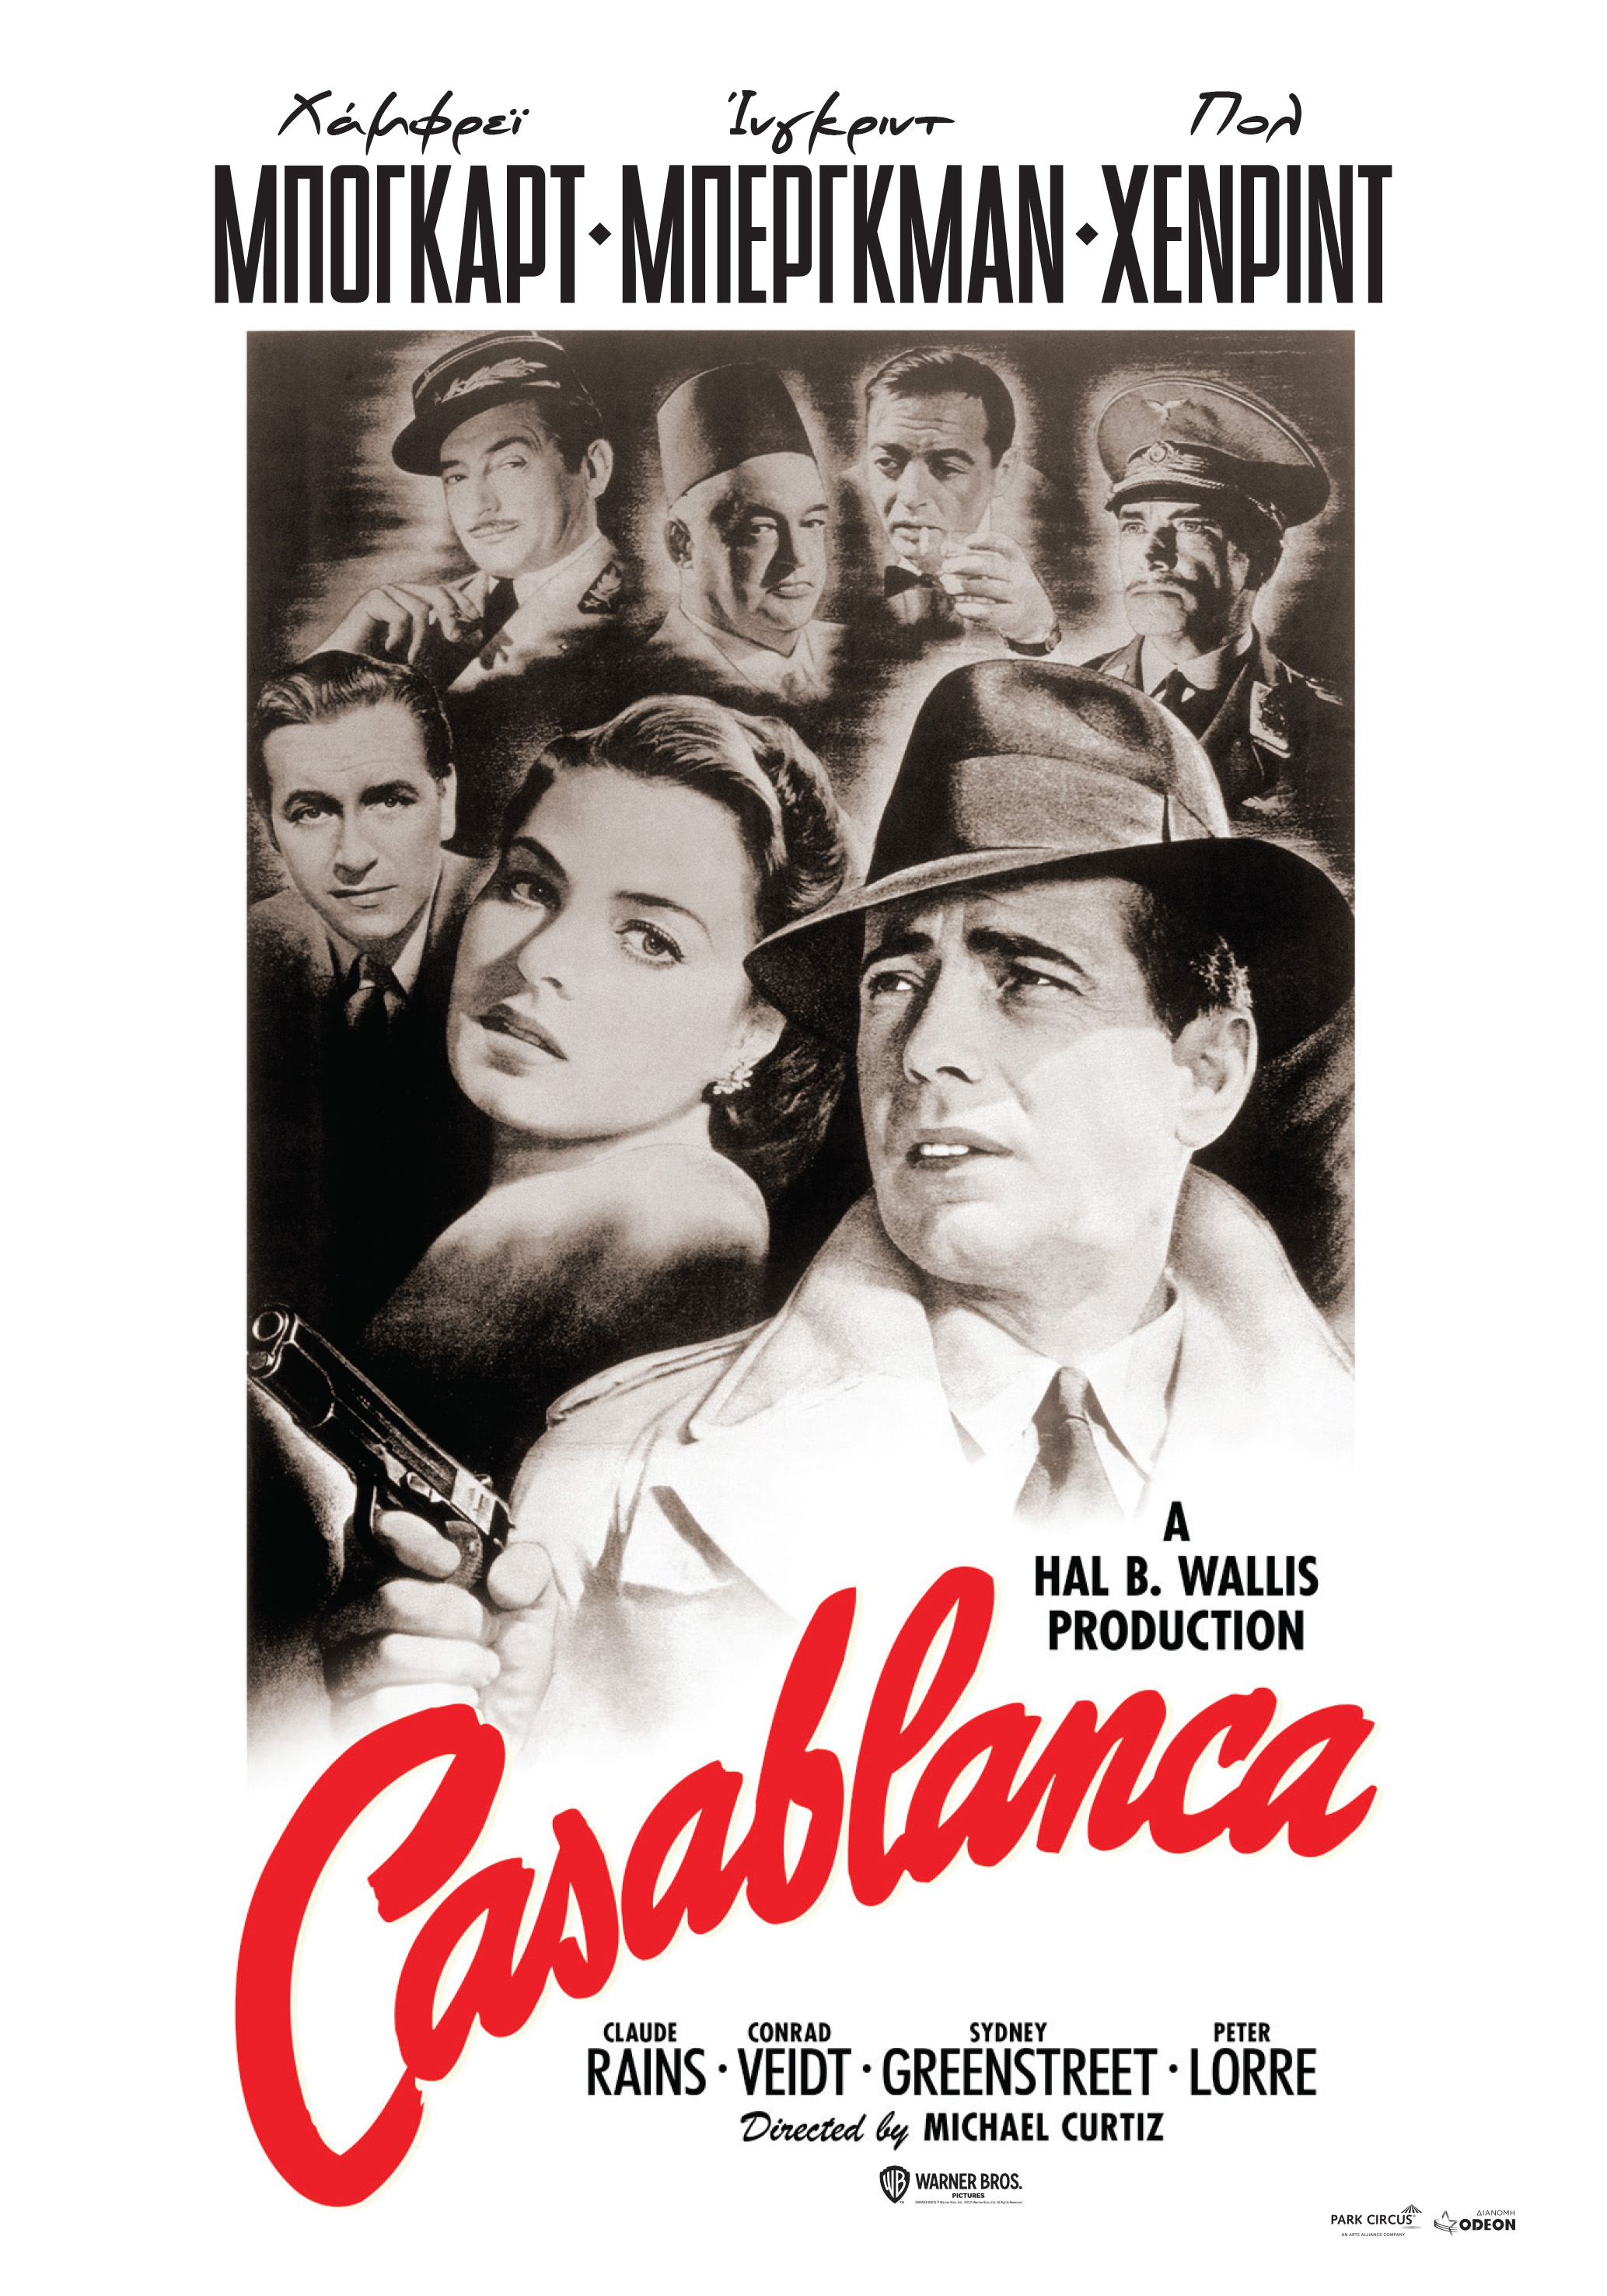 Casablanca Reissue Poster.jpg